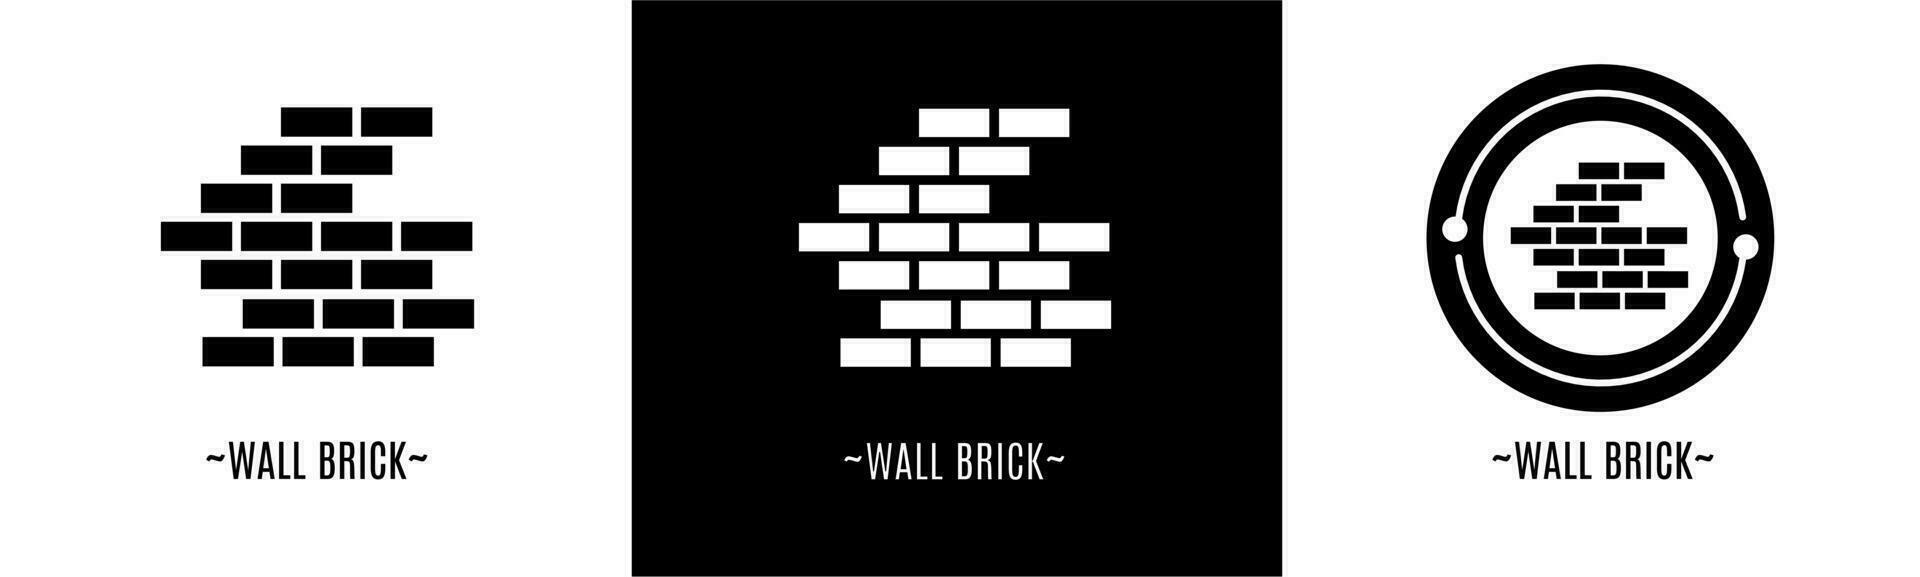 Wall brick logo set. Collection of black and white logos. Stock vector. vector